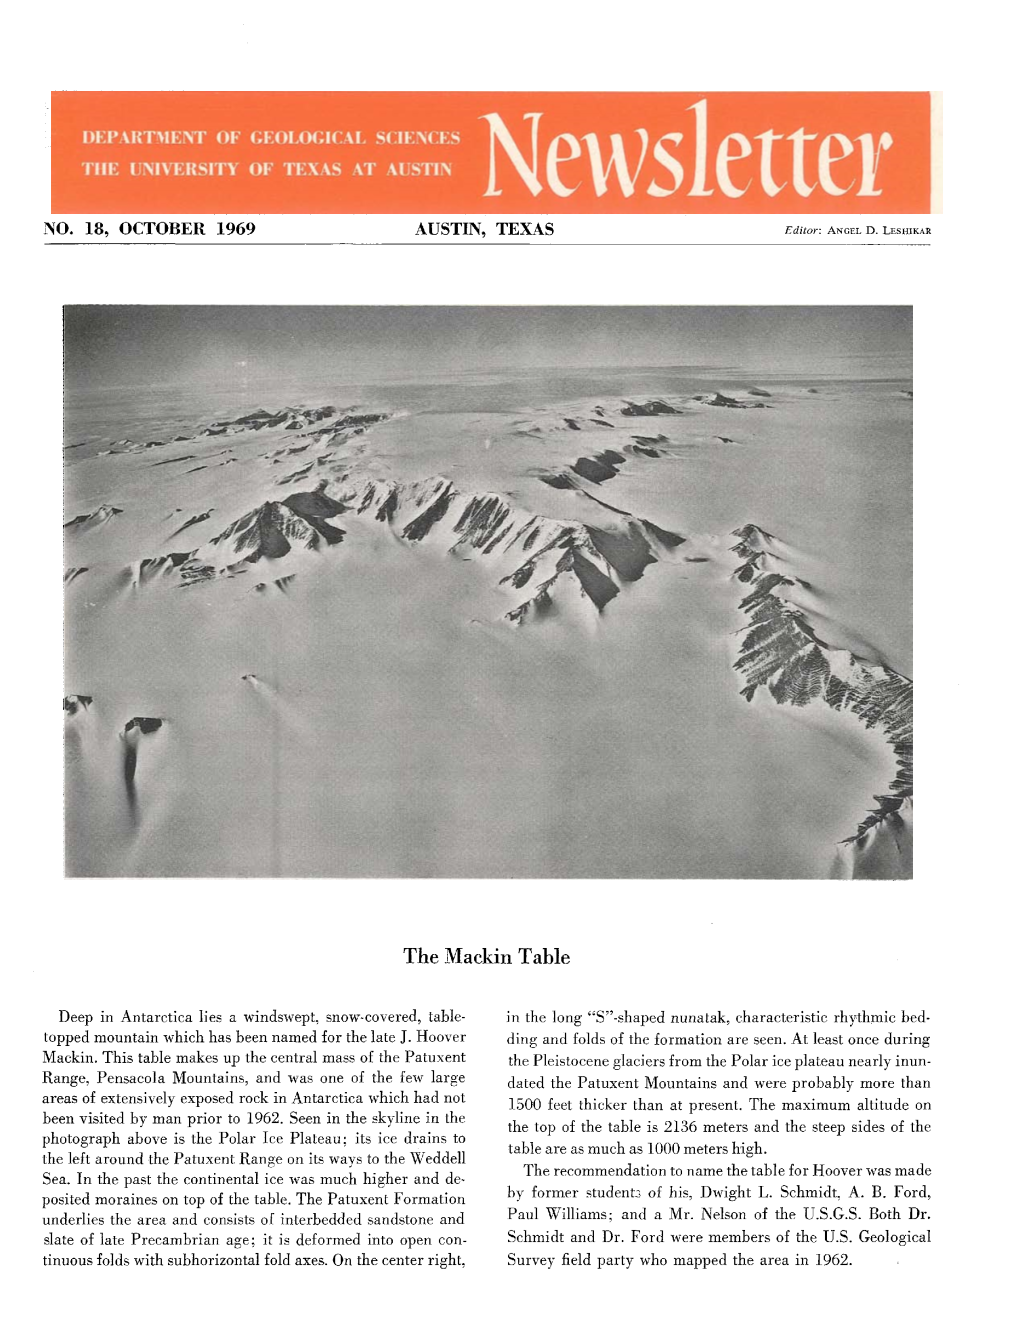 Department of Geological Sciences Newsletter No. 18, October 1969